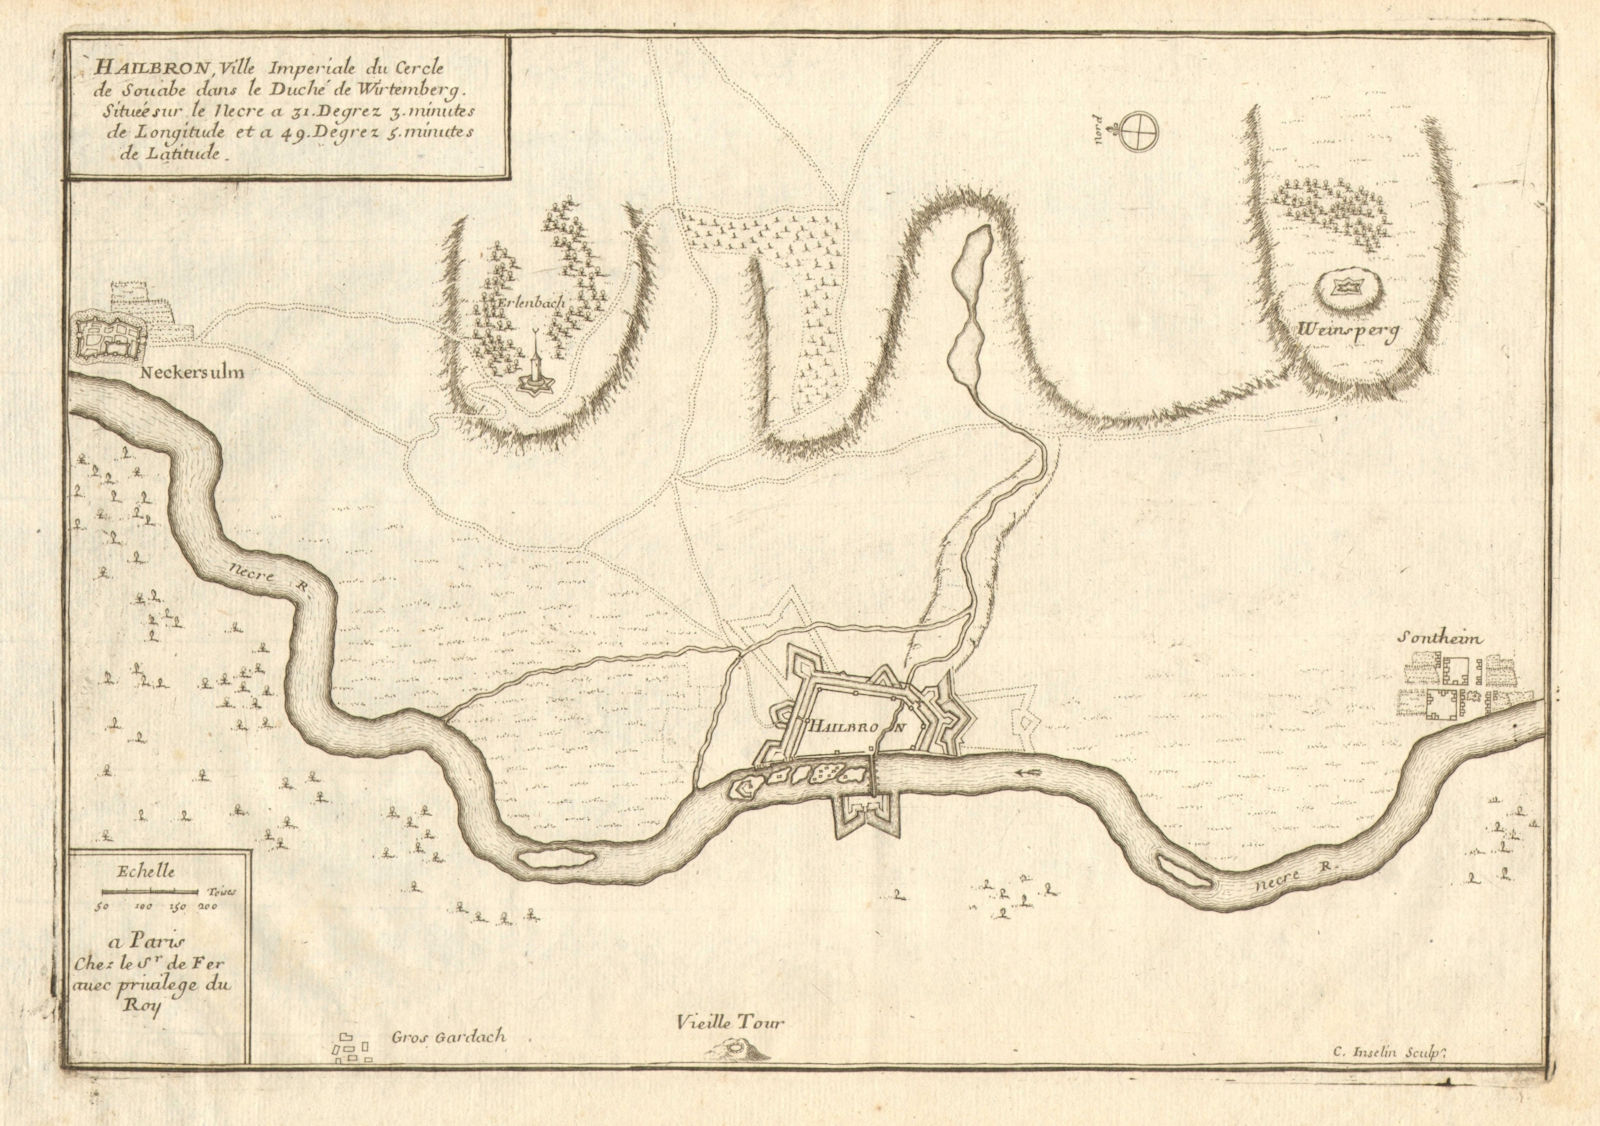 Associate Product 'Hailbron, ville Imperiale…'. Heilbronn Sontheim Neckarsulm. DE FER 1705 map